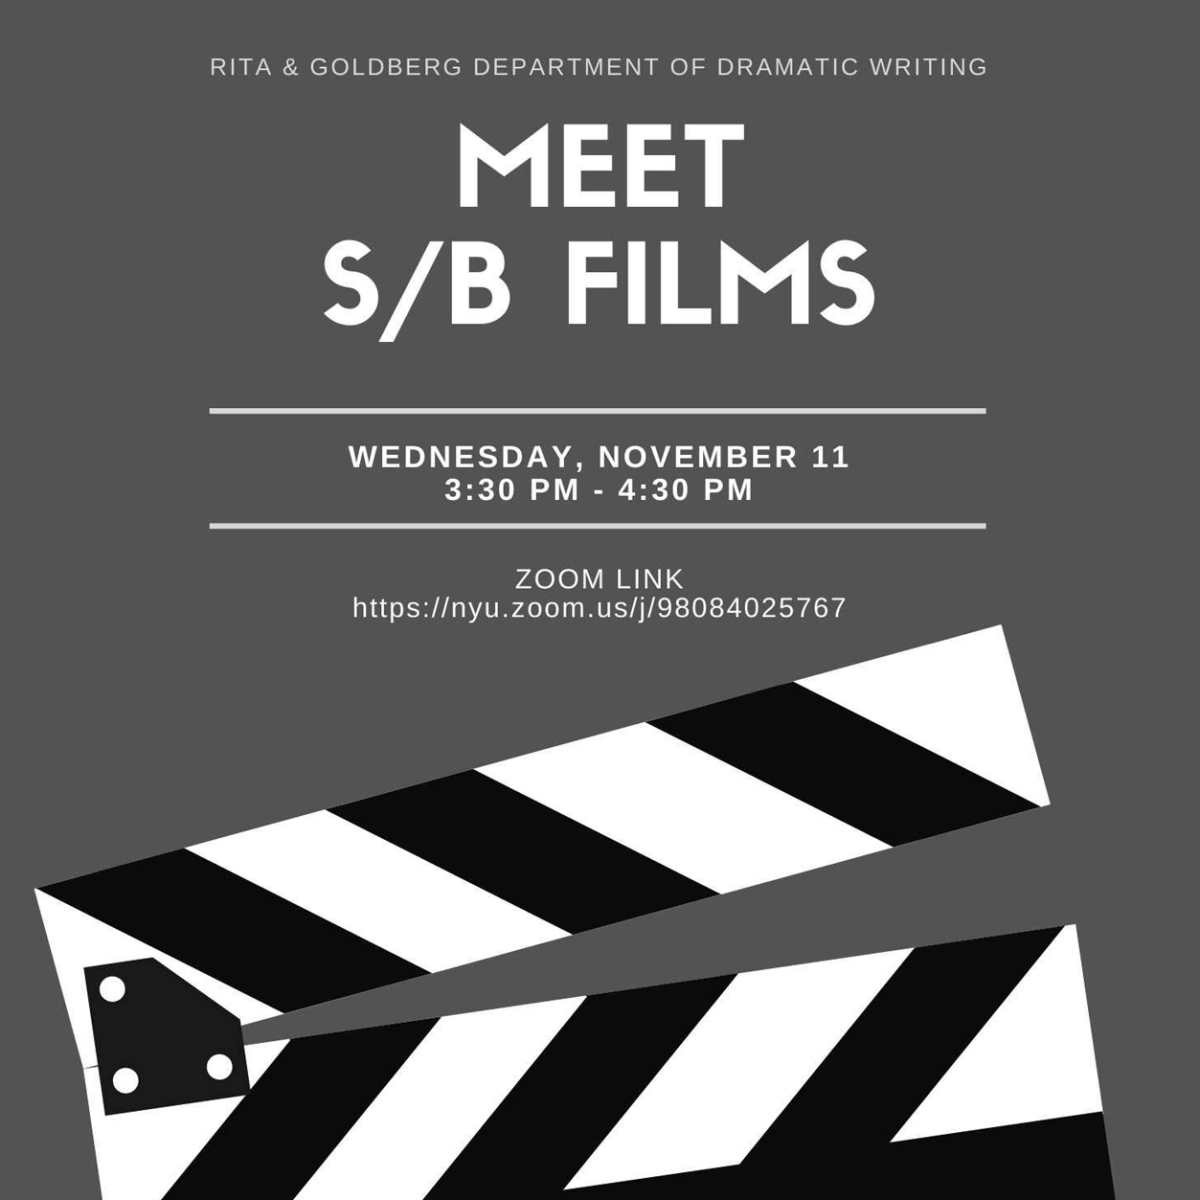 Meet S/B Films